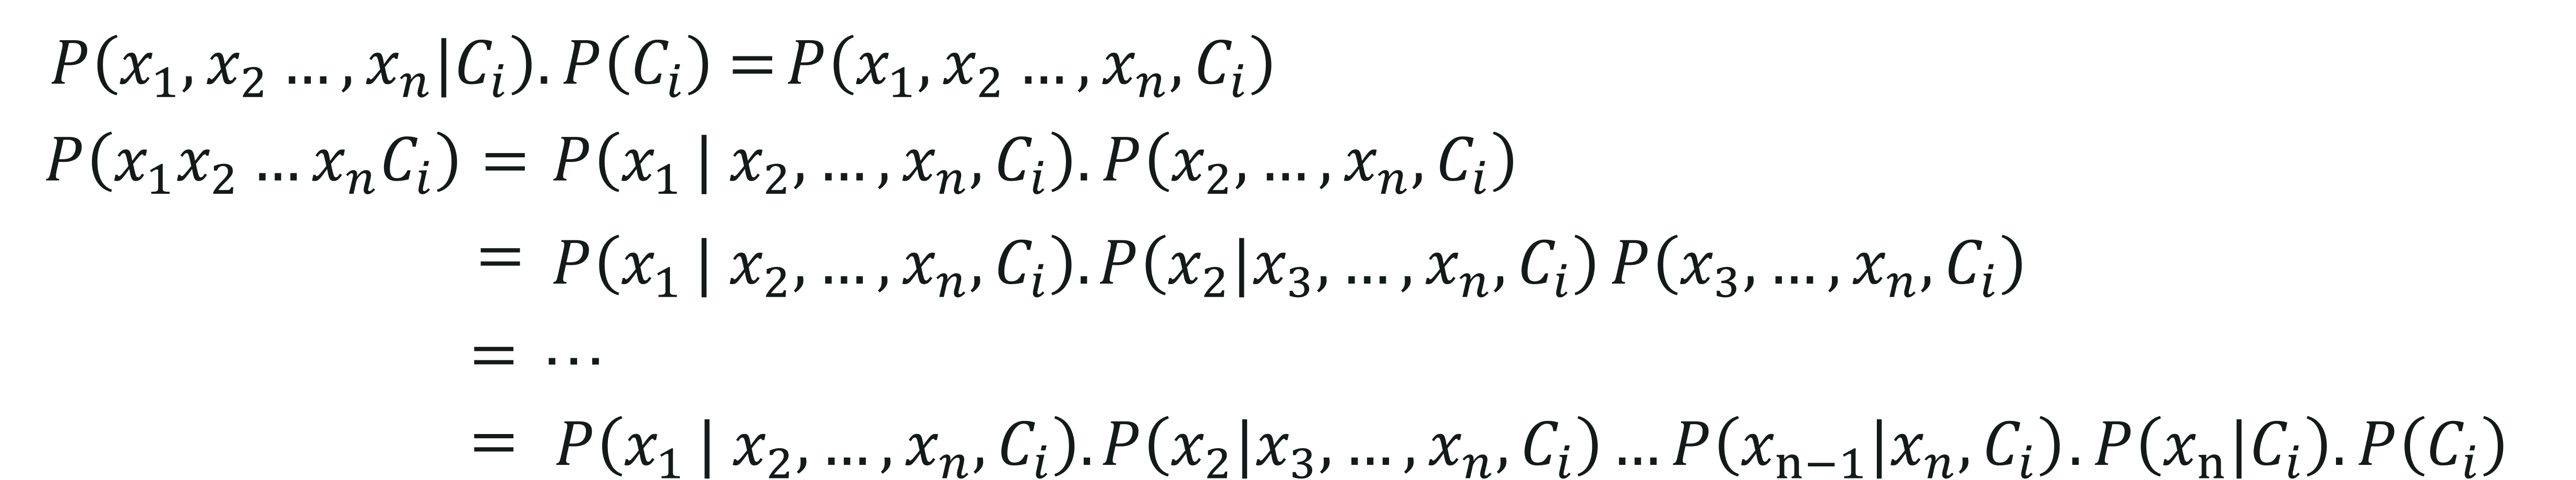 Bayes Theorem Derivation - Naive Bayes In R - Edureka